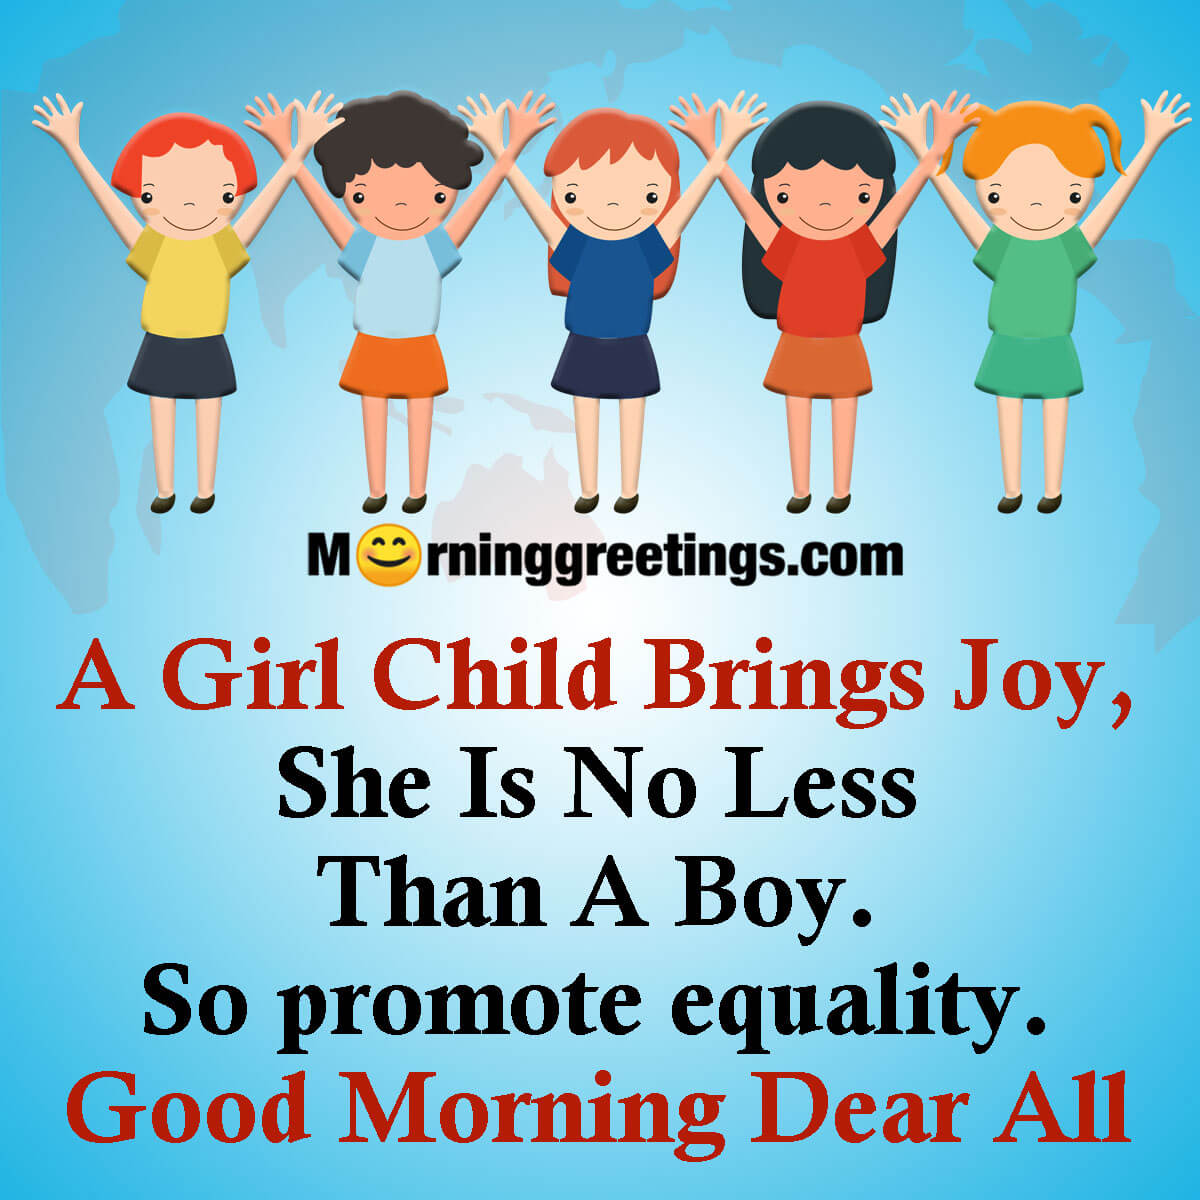 Good Morning Dear All Girl Child